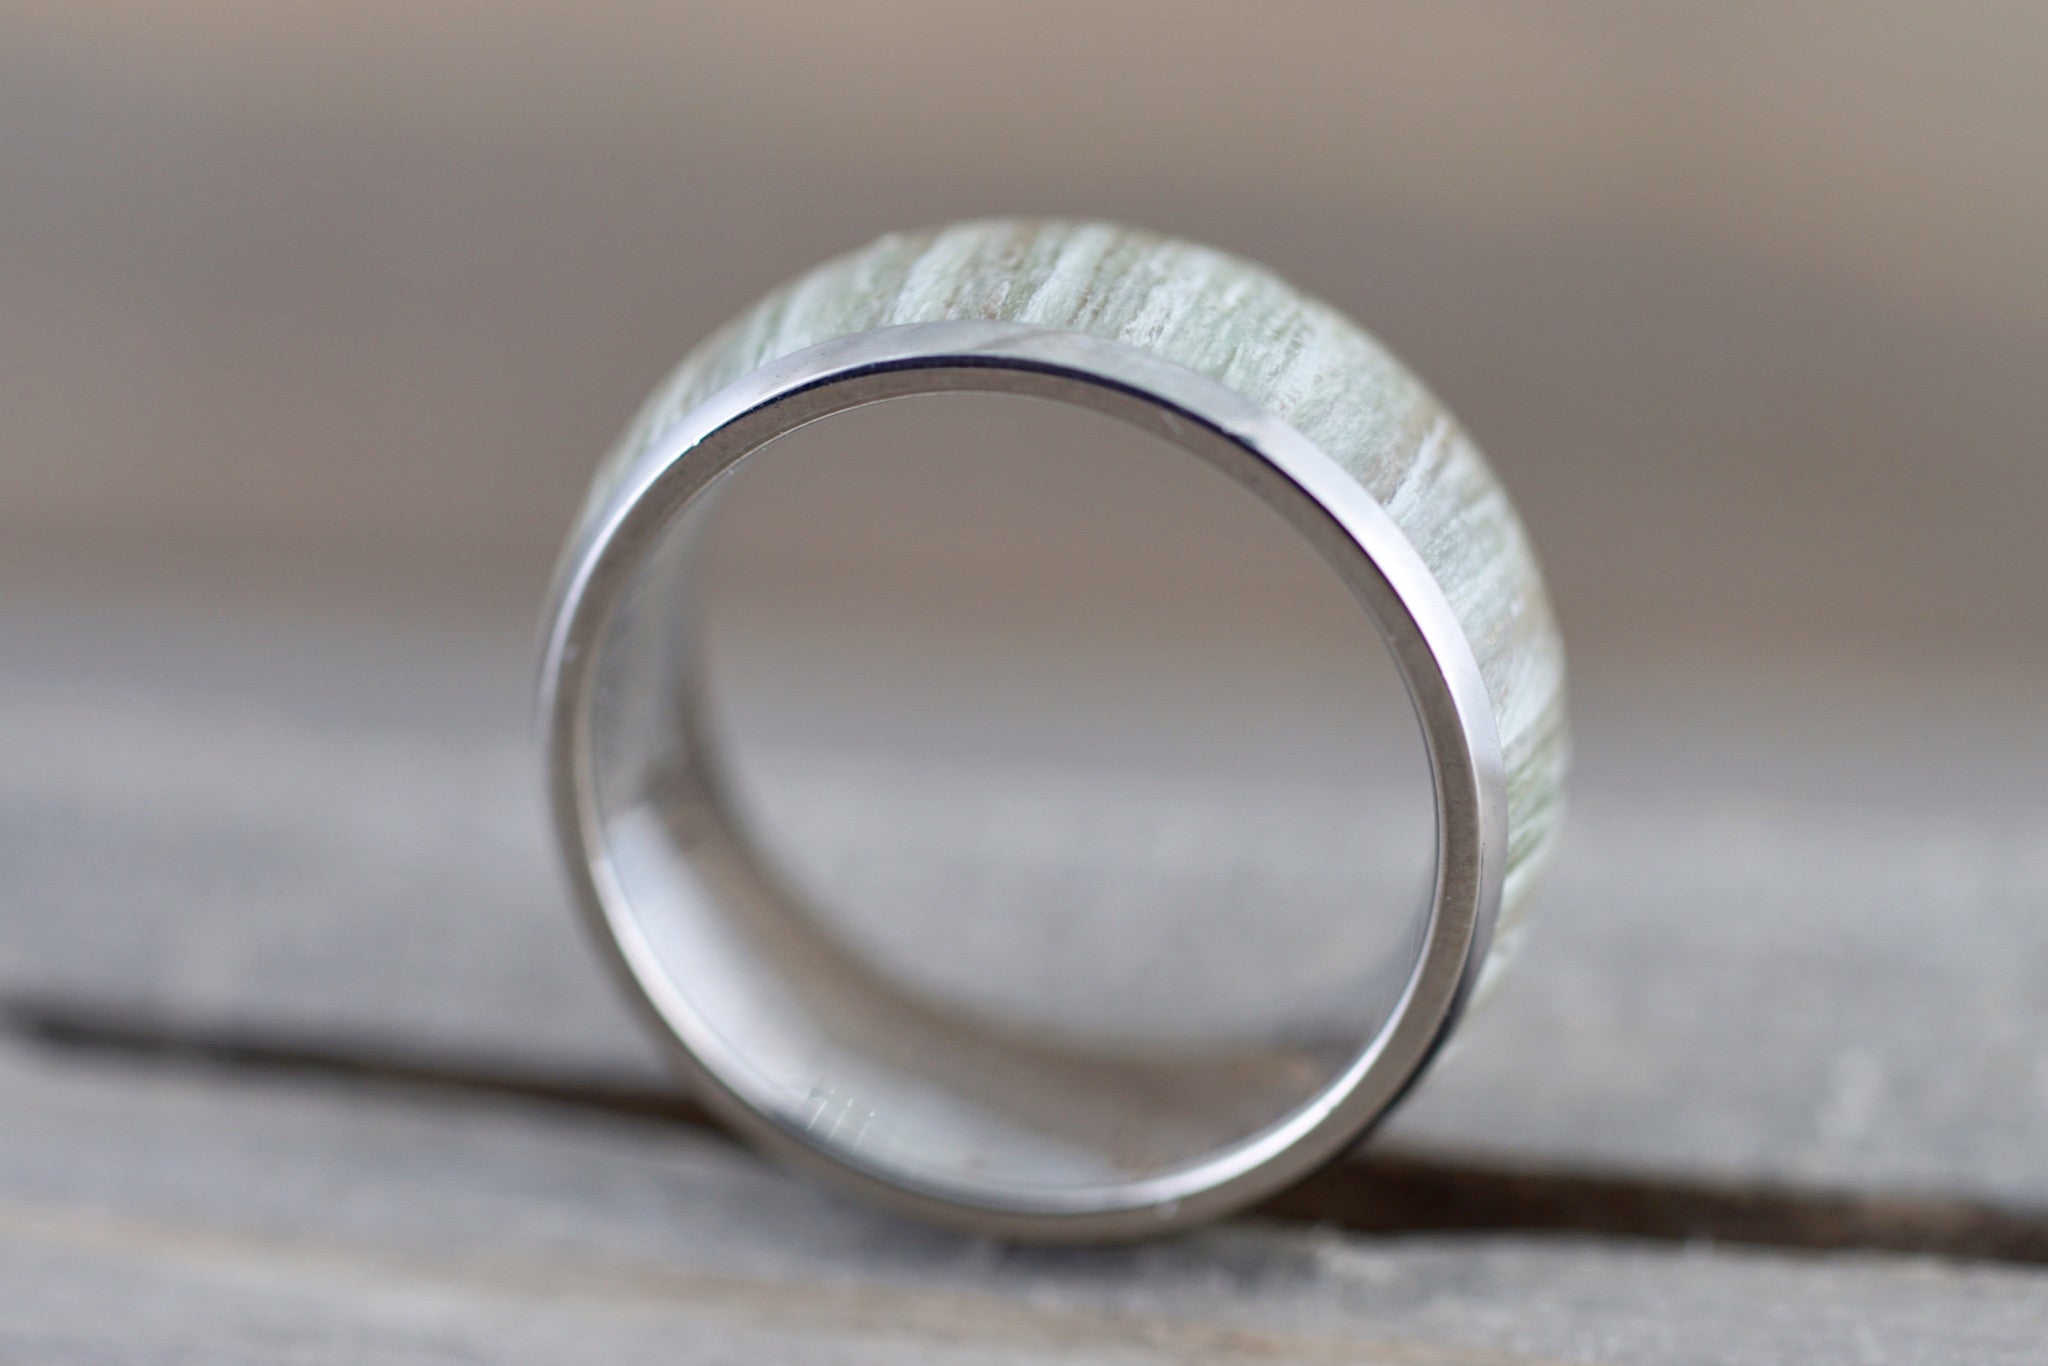 White Ash Wood Underlay in Titanium 8mm Domed High Men's Ring